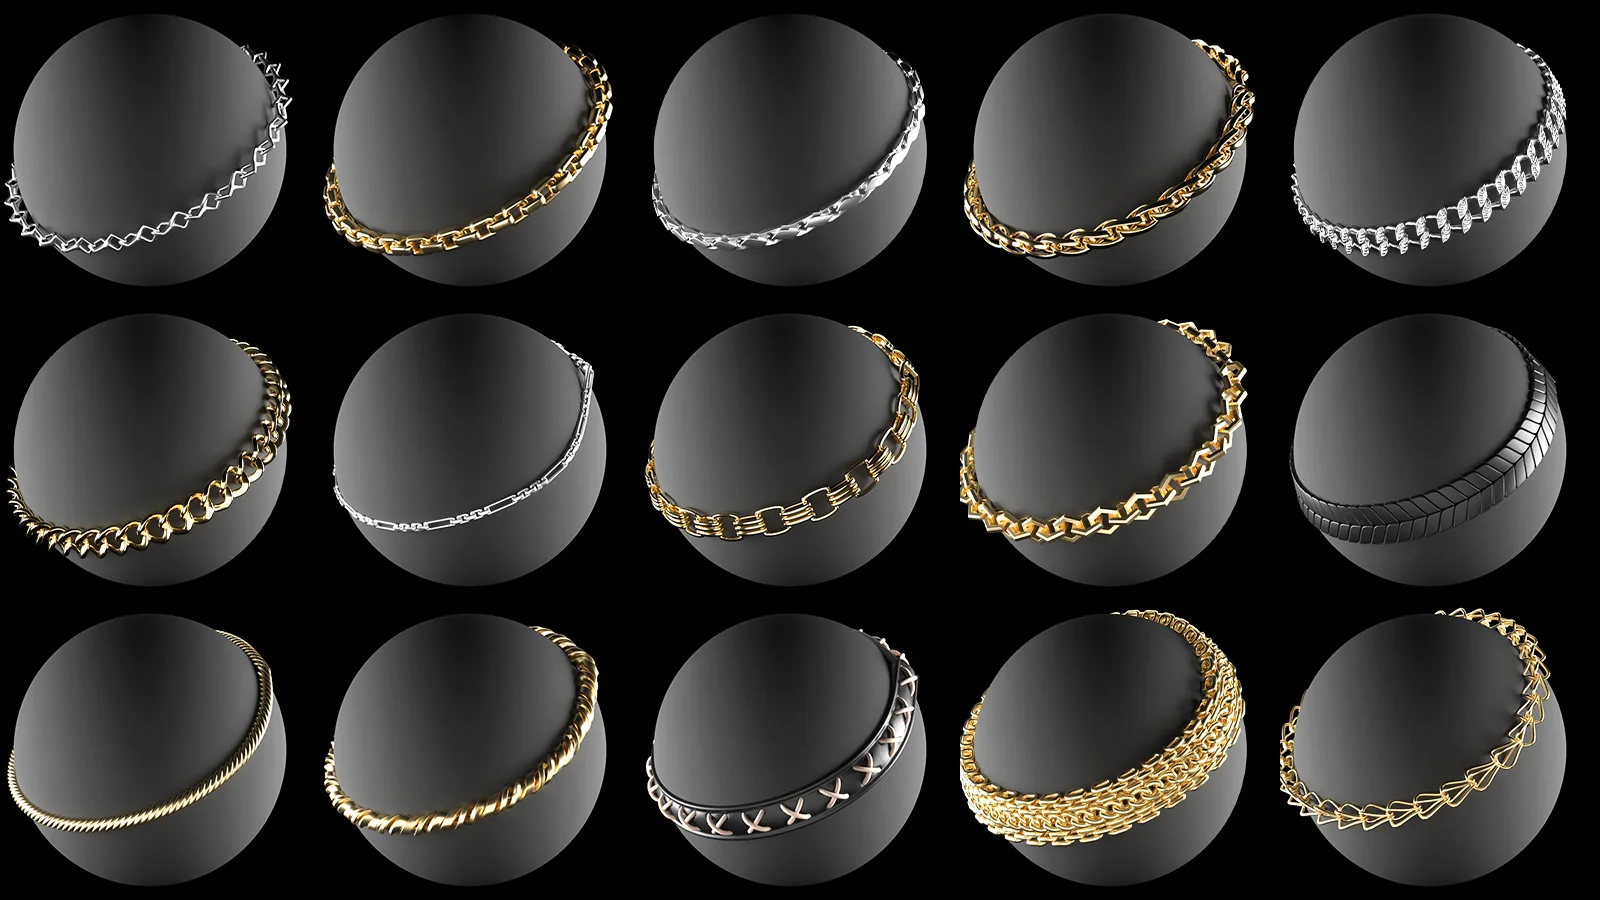 Jewelry imm Brush vol.2 + 3d Print Format (chain, ring, pendant)